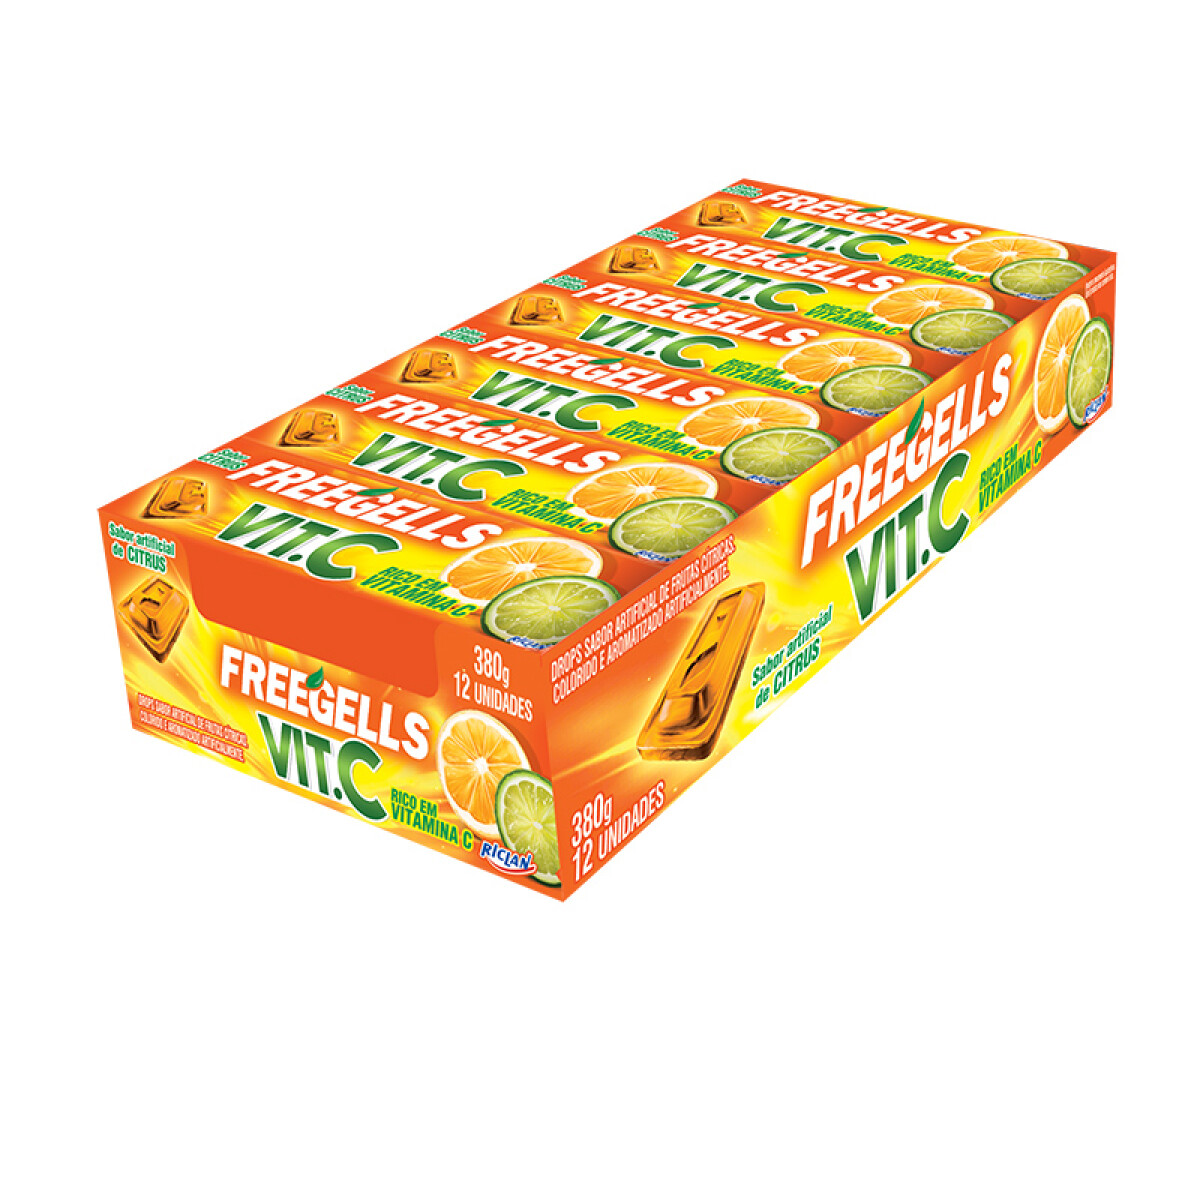 Pastillas FREEGELLS x12 Unidades - Citrus 